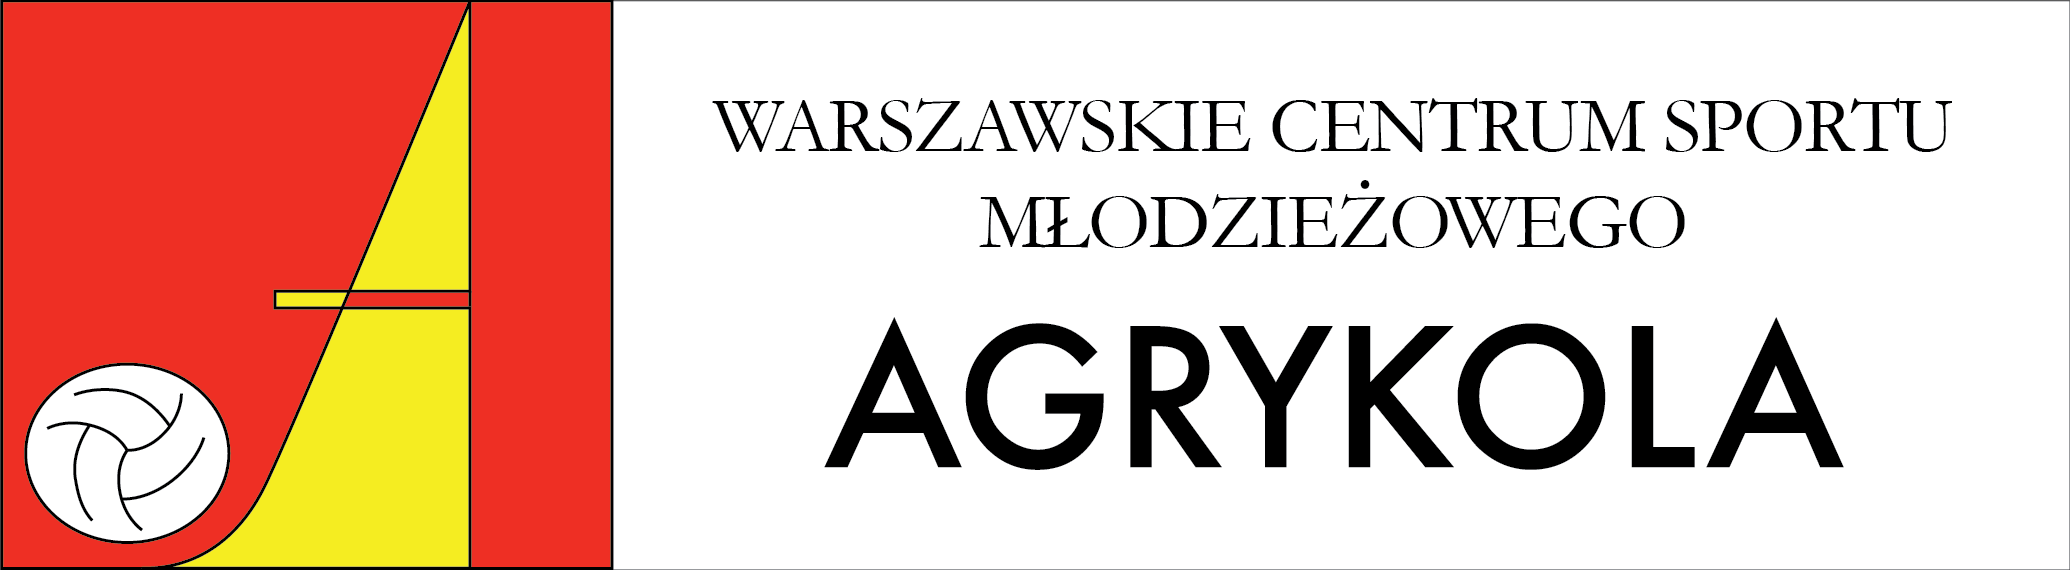 Agrykola-noclegi, Hostel Warszawa